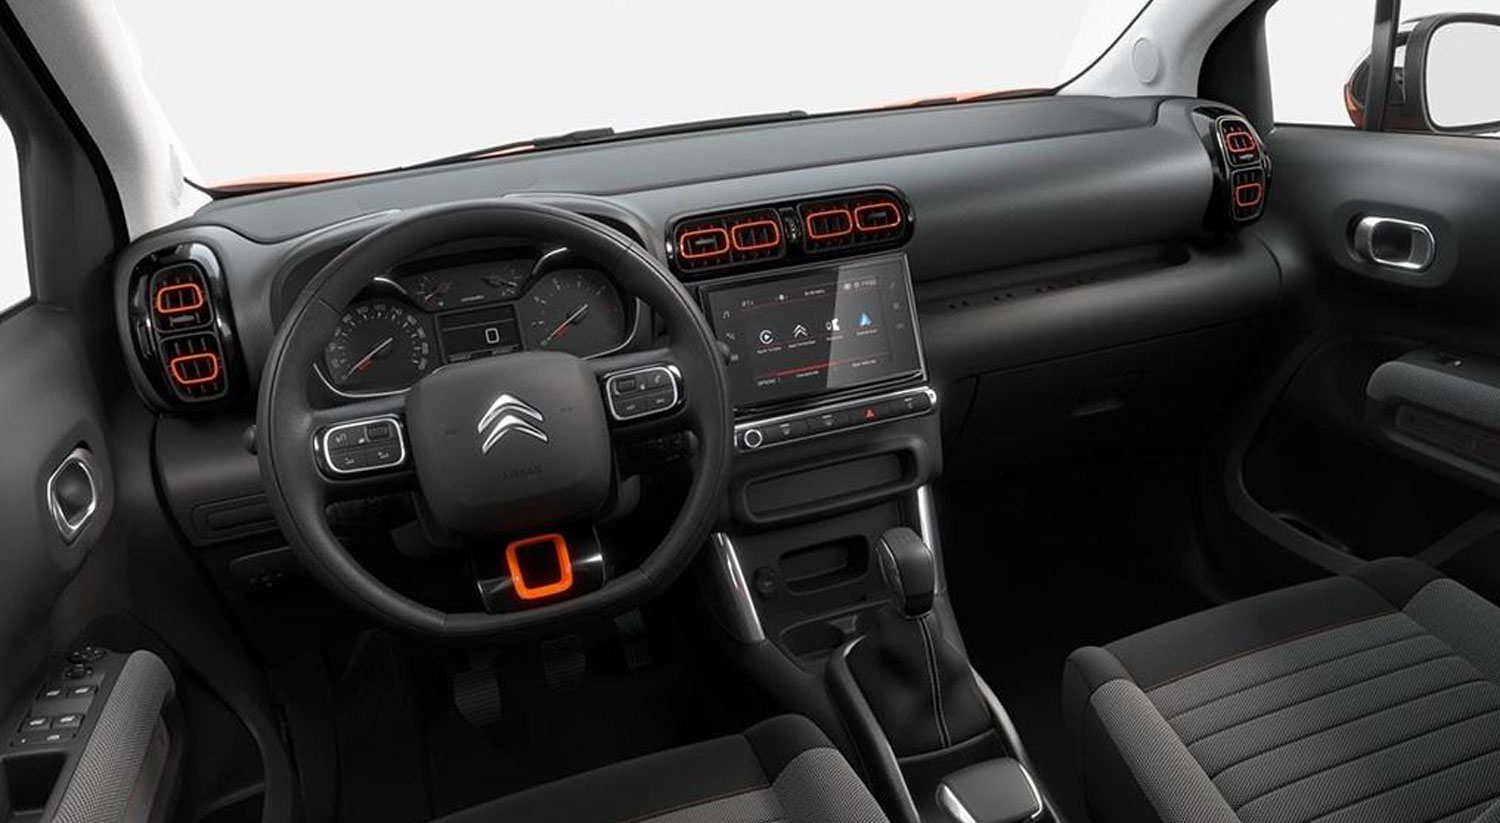 Descubre el nuevo Citroën C3 Aircross #InspiredBy - Carnovo